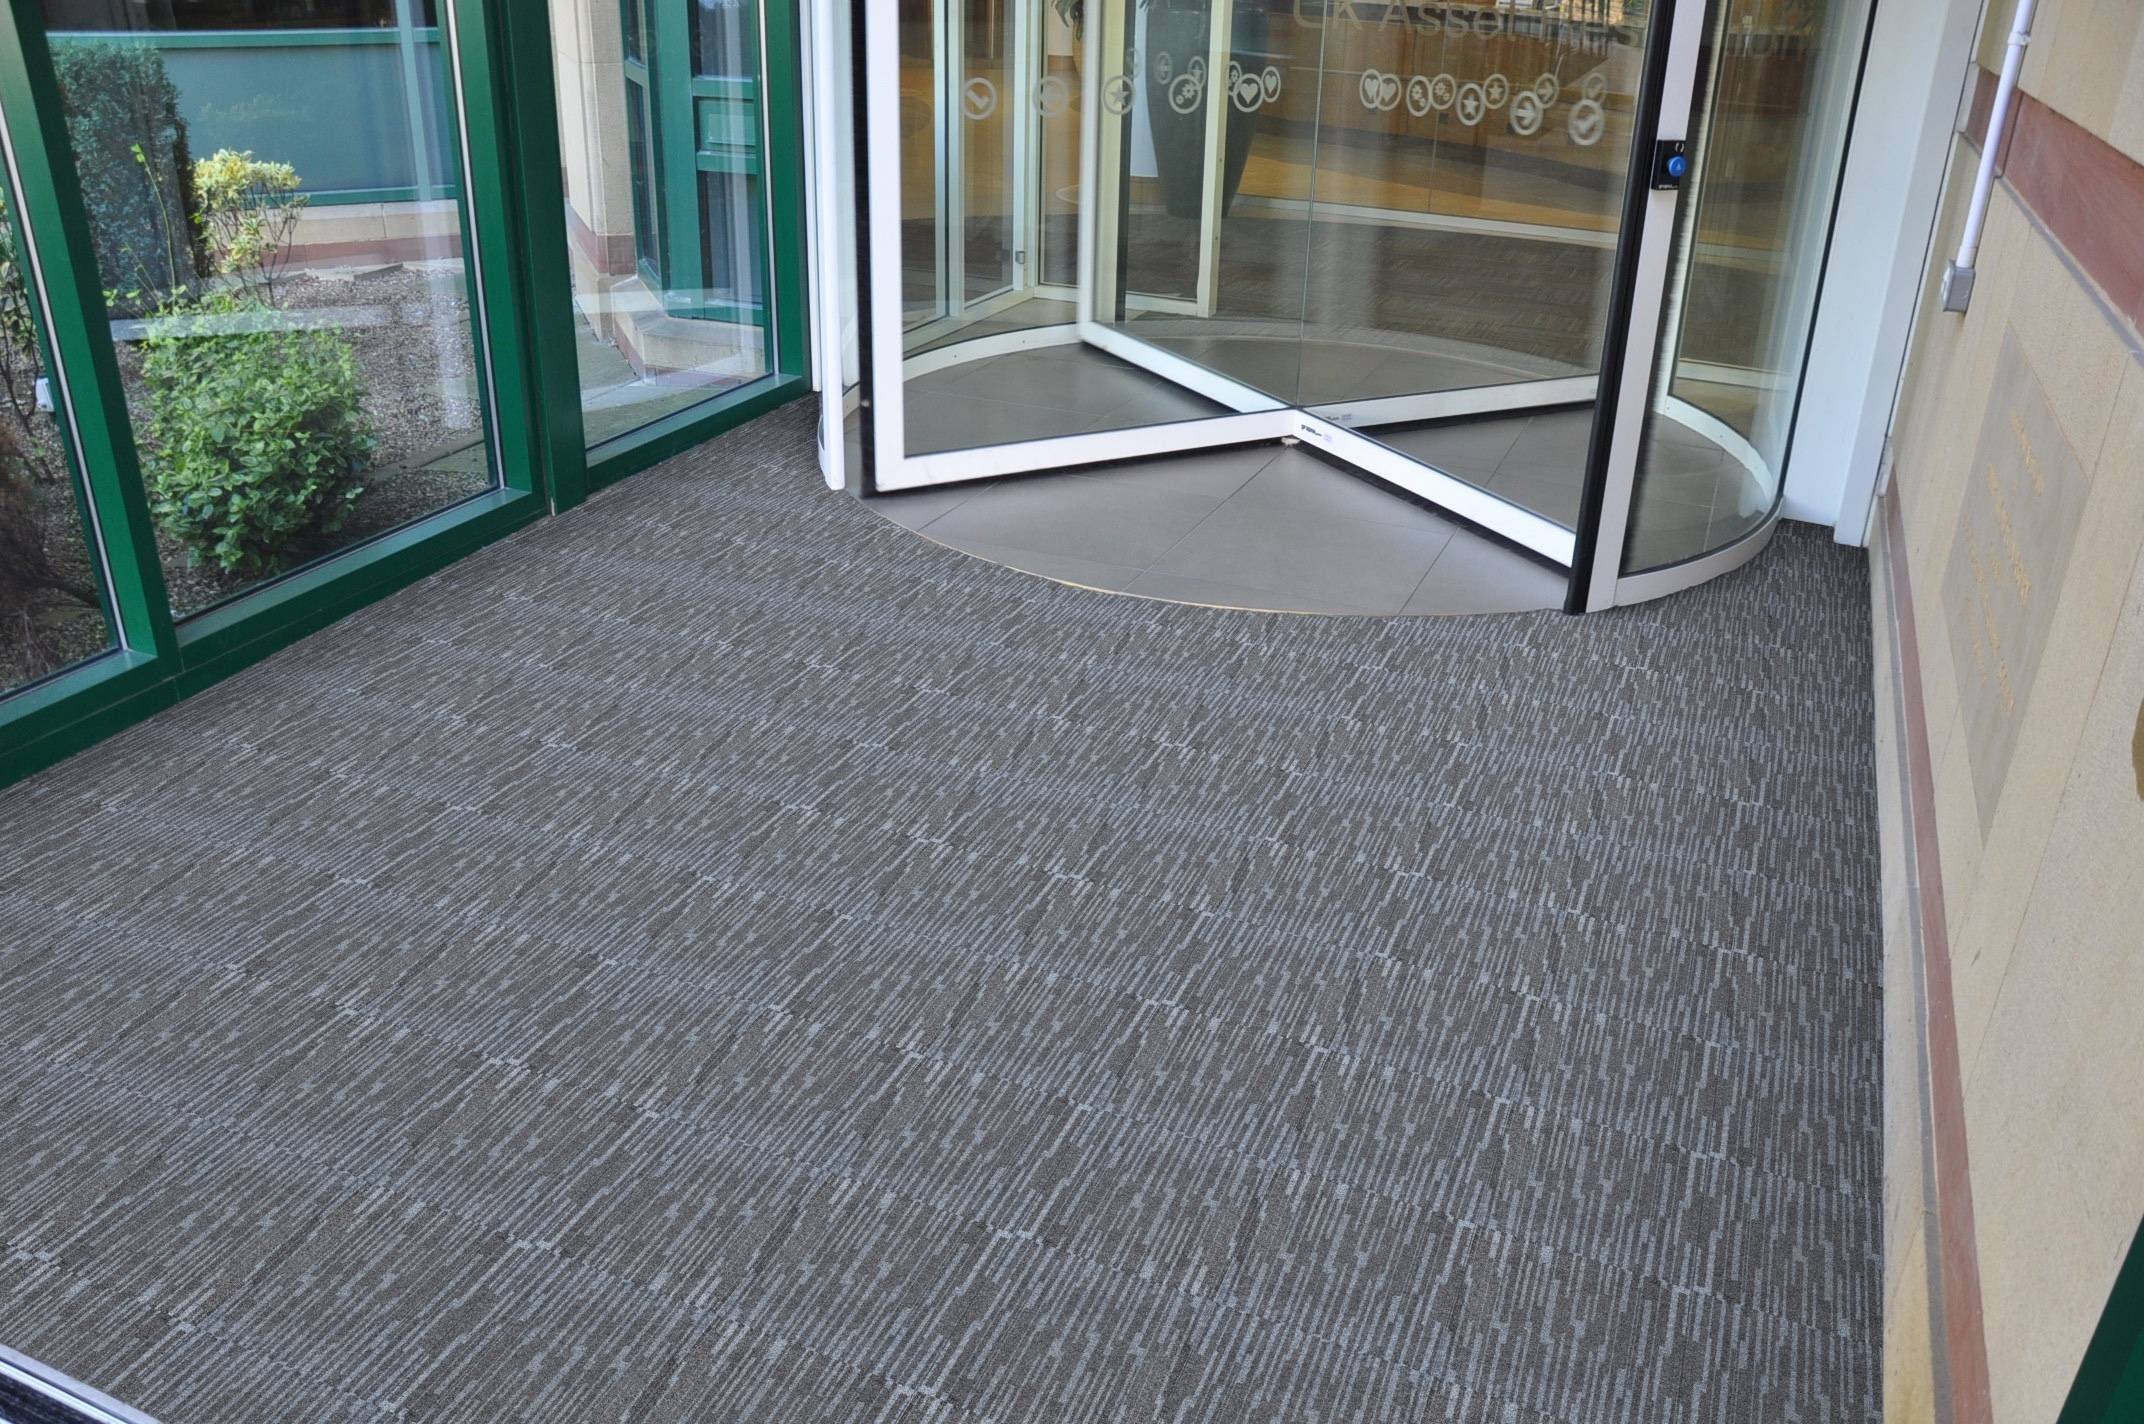 Paragon Workspace Entrance Design Carpet Tile Design 3 Victor 50 x 50 cm